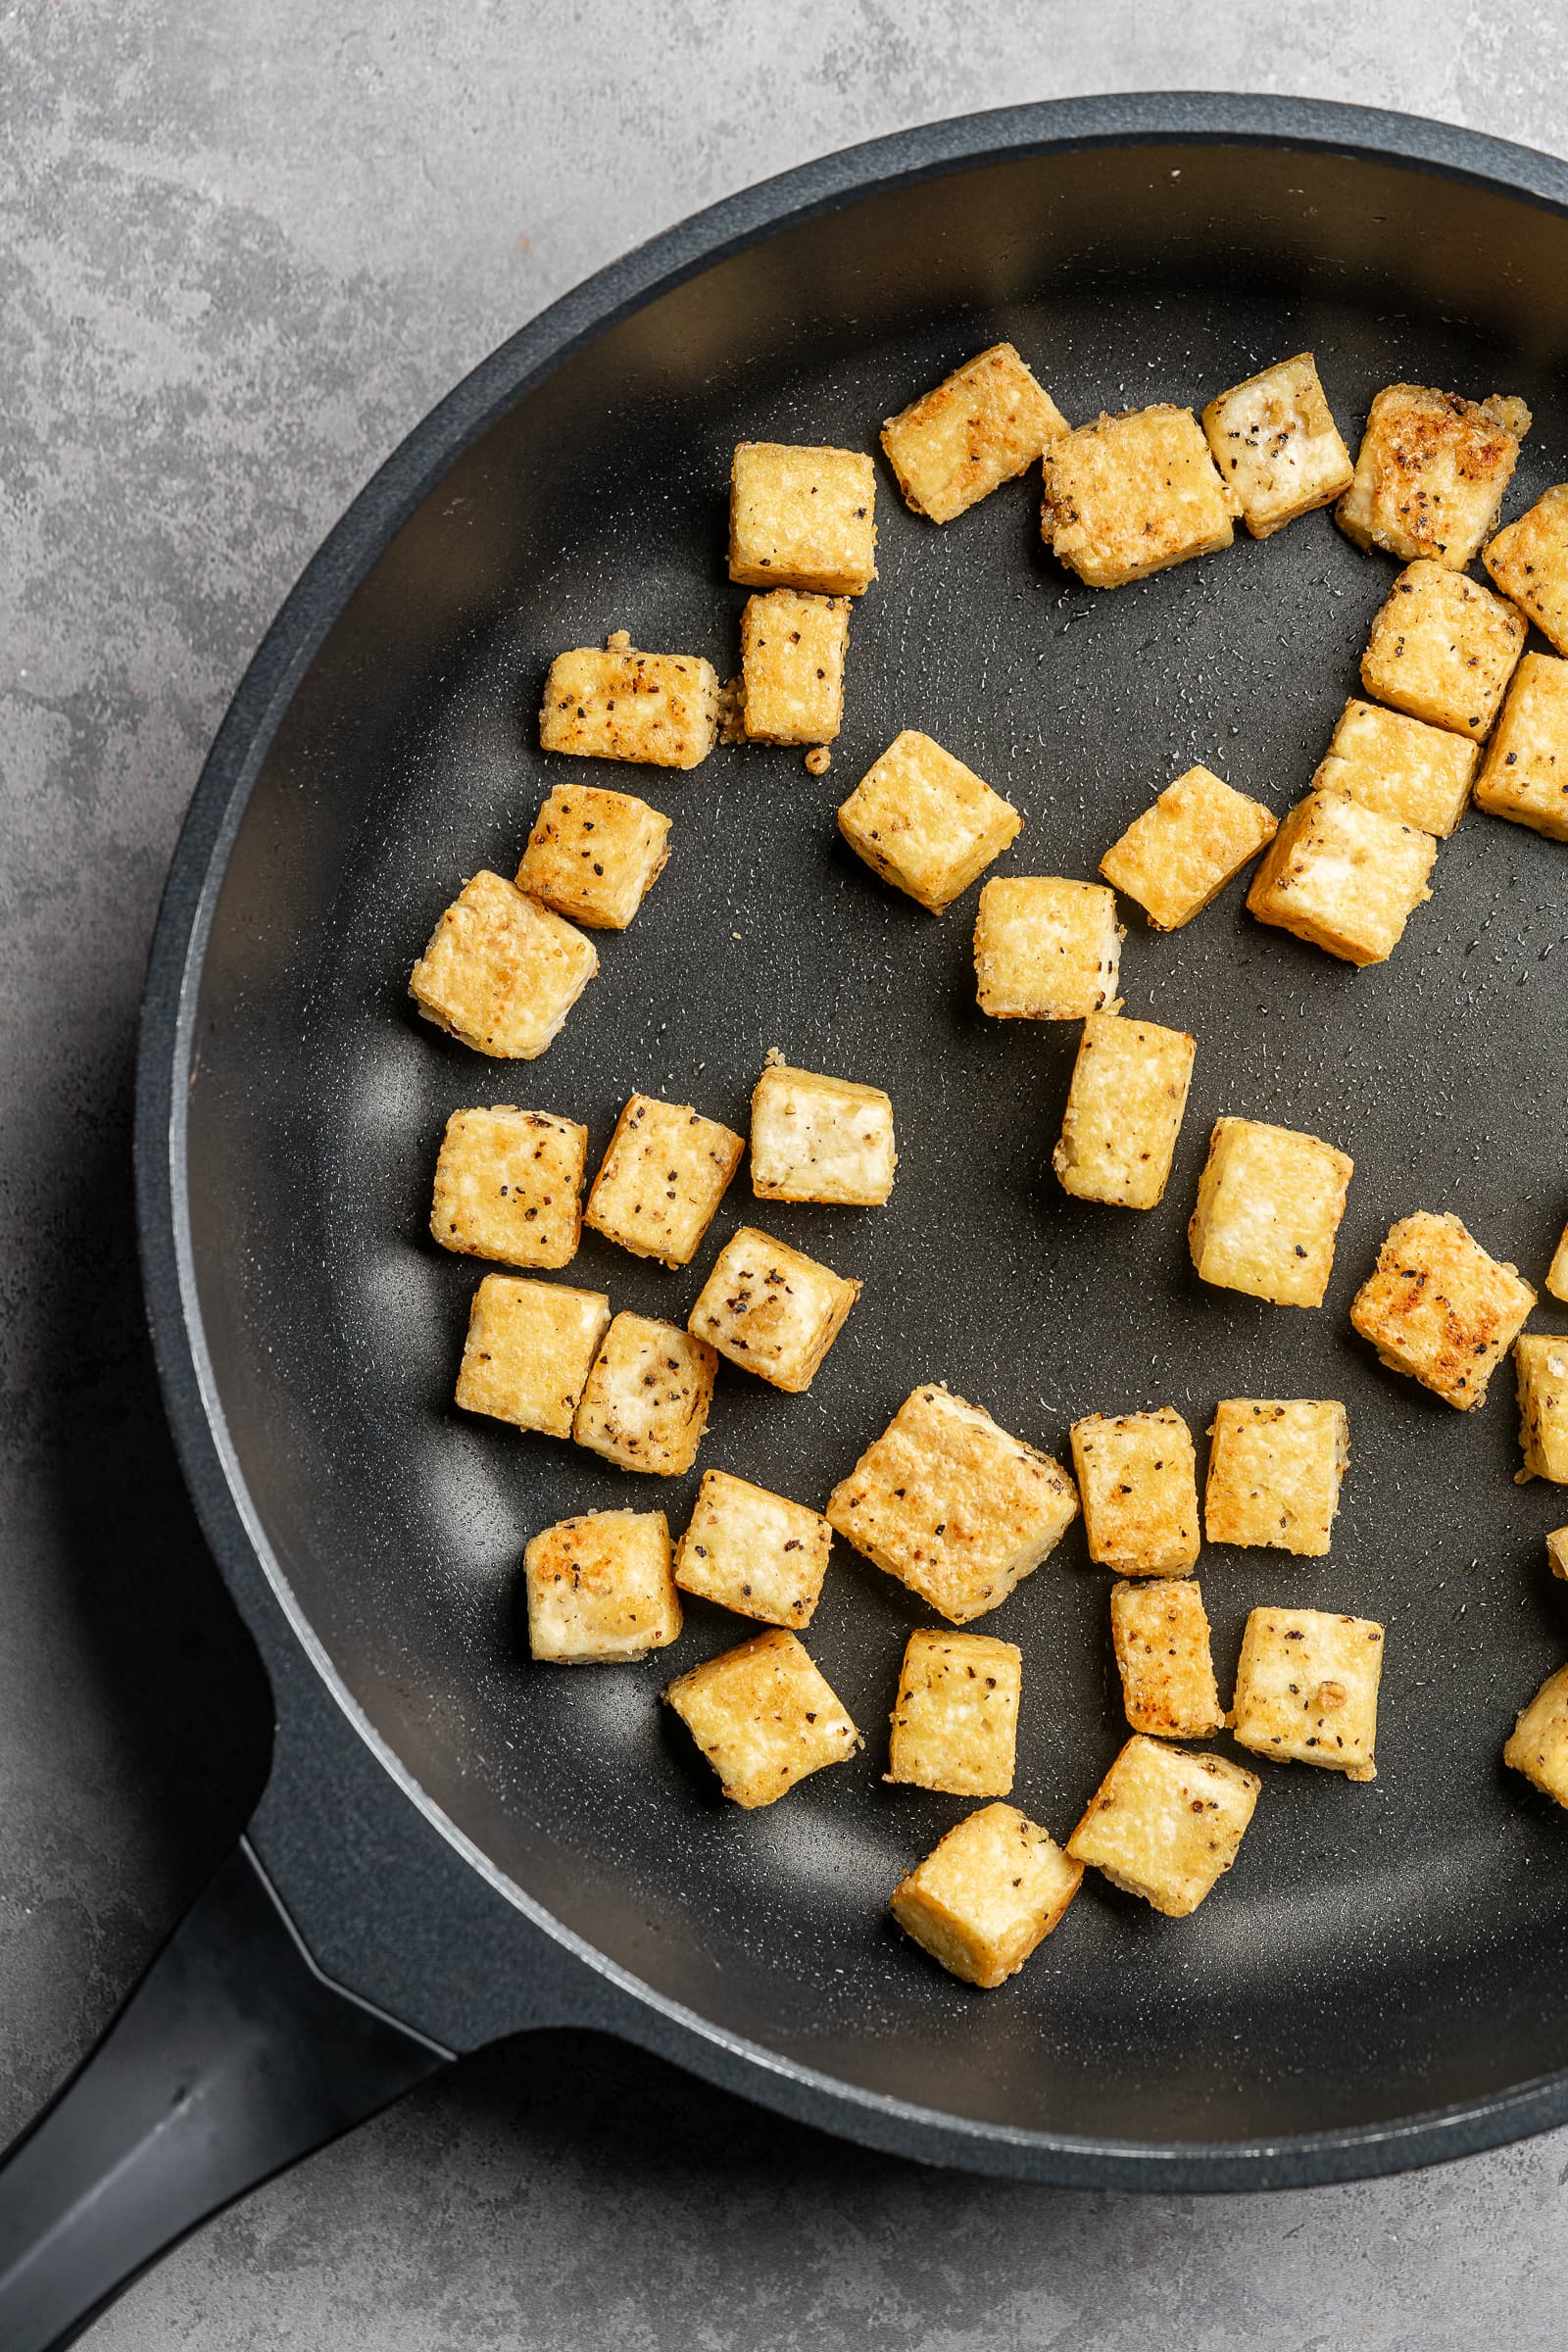 Crispy tofu in a frying pan.